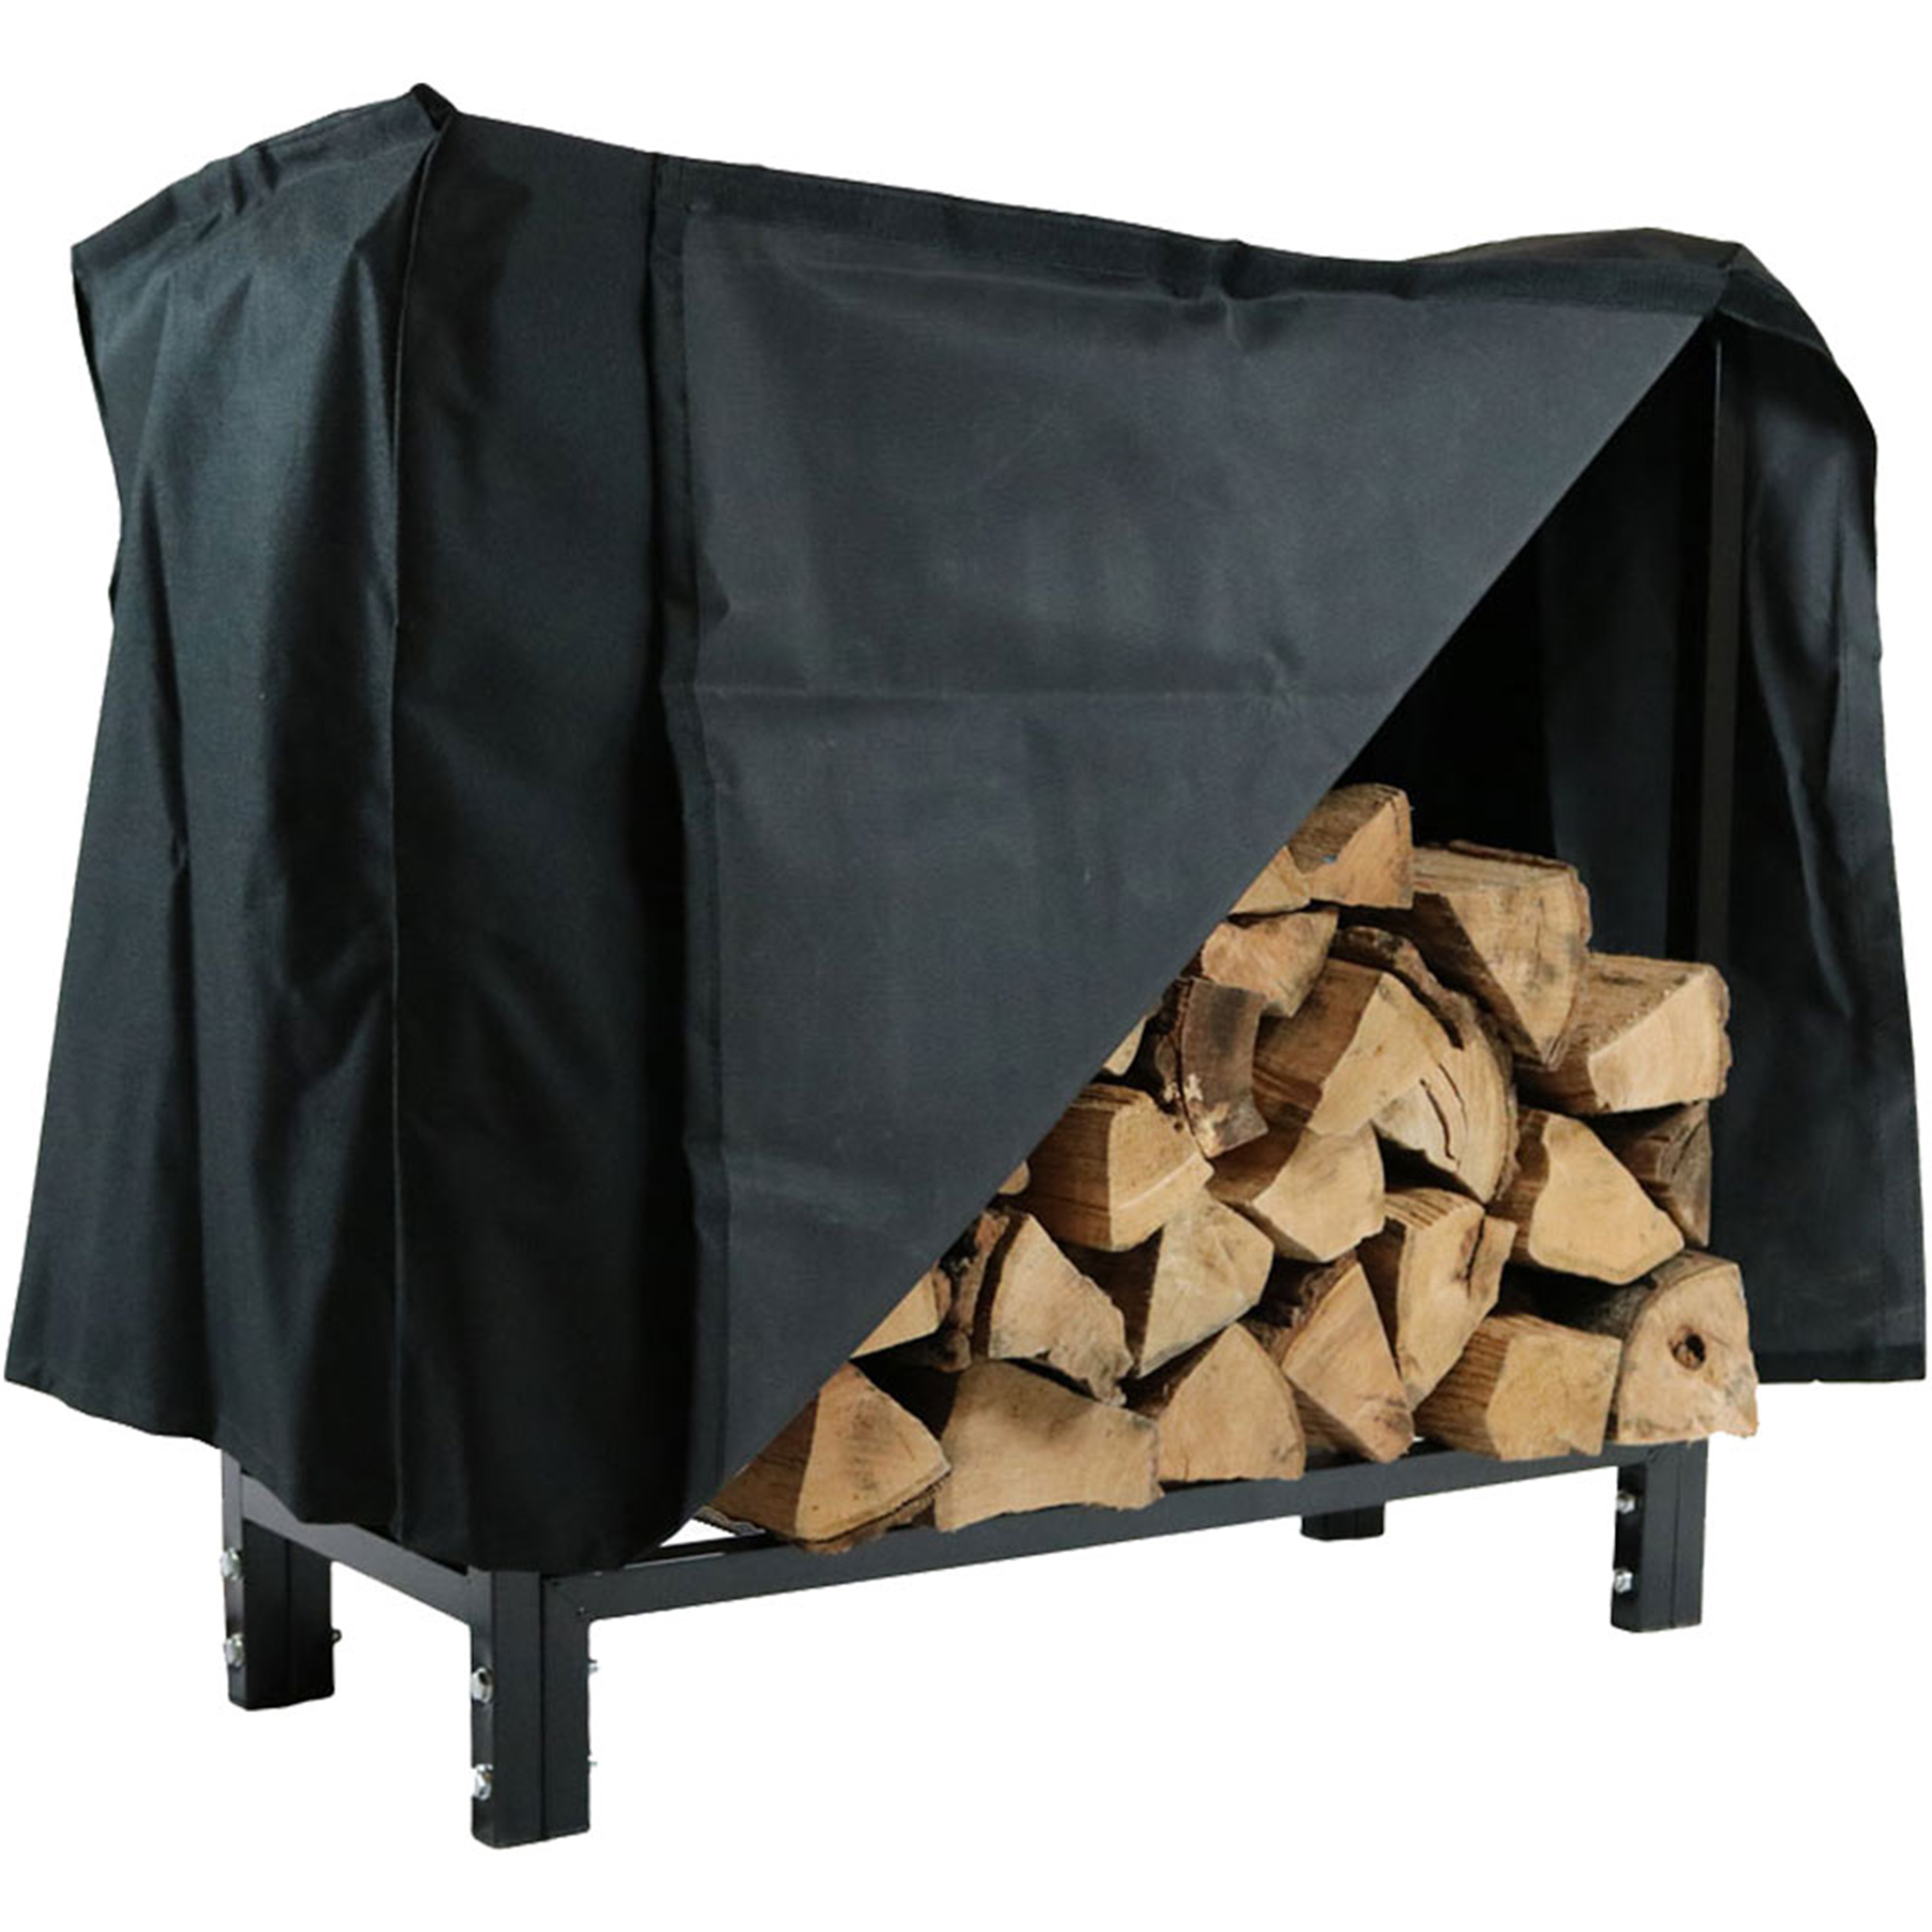 Sunnydaze Black Steel Firewood Log Rack &amp; Cover - 30-Inch